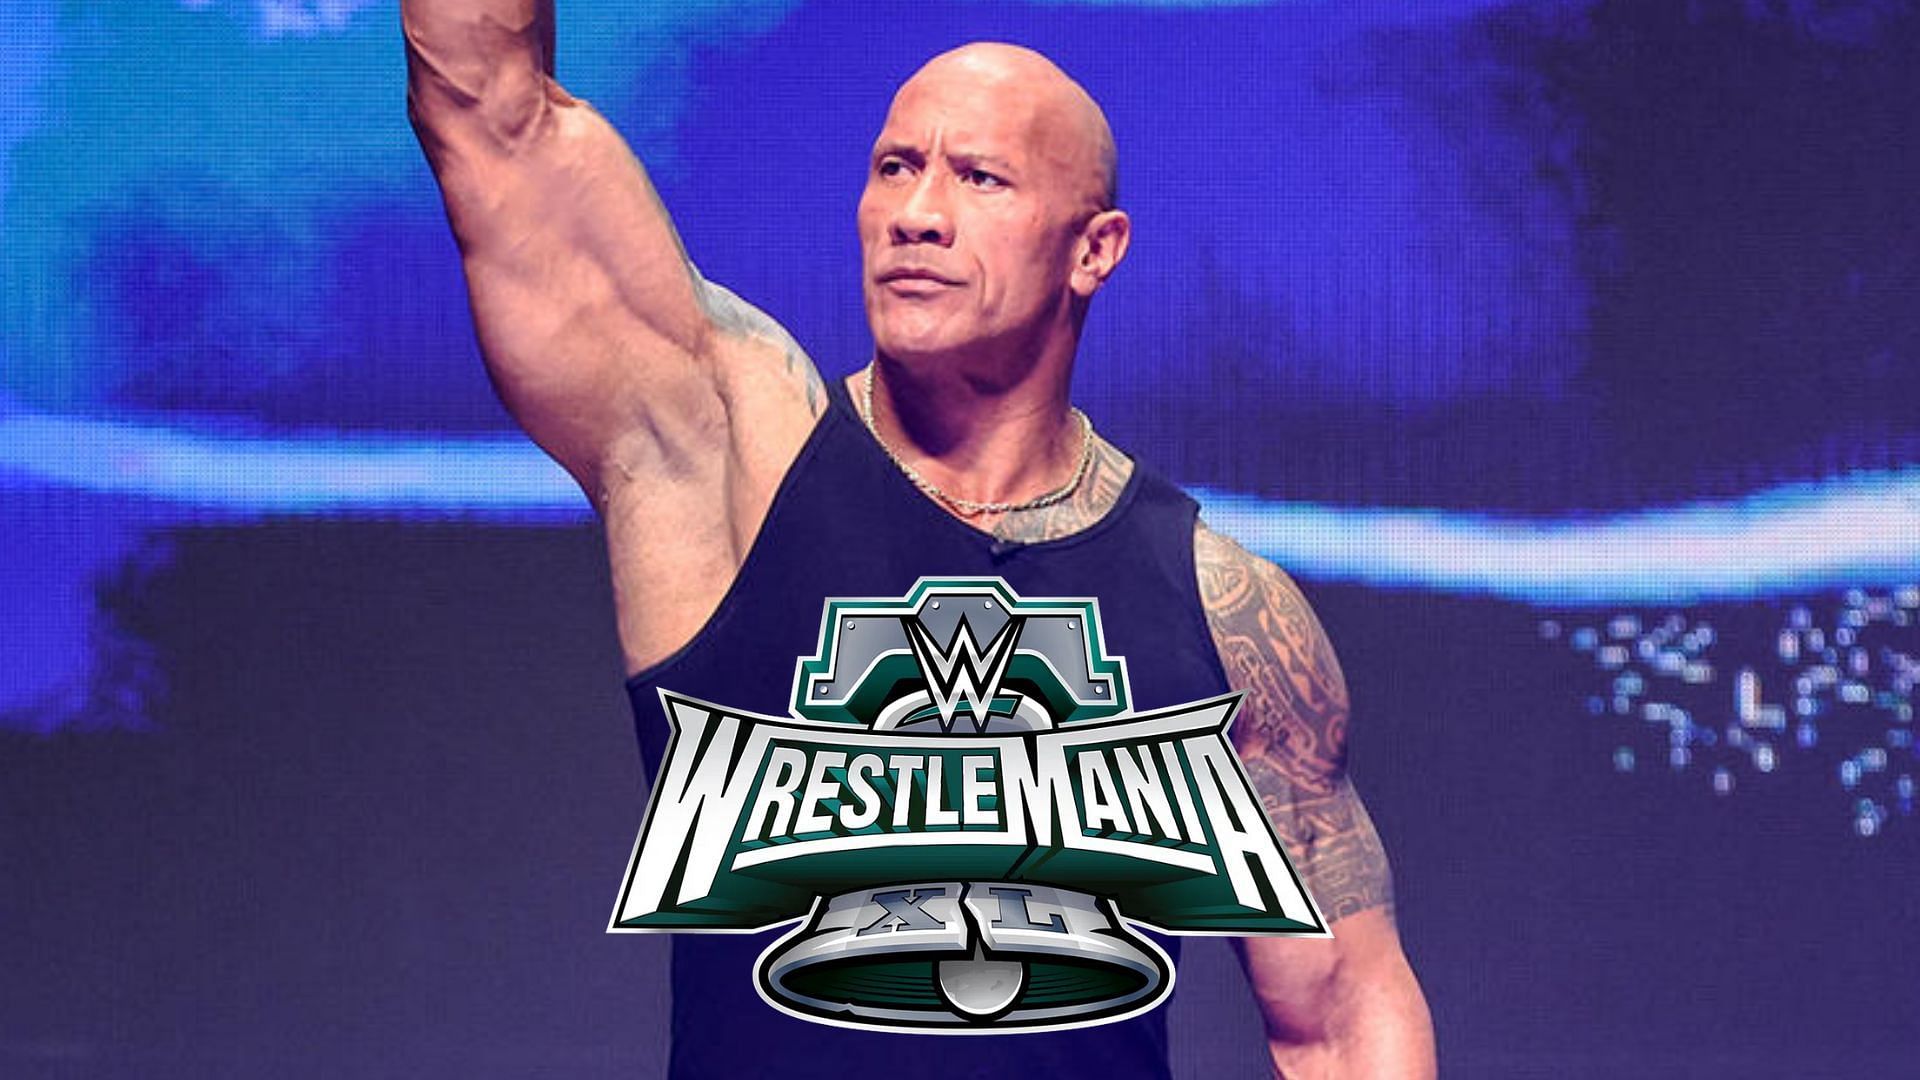 The Rock has resurfaced on WWE TV!